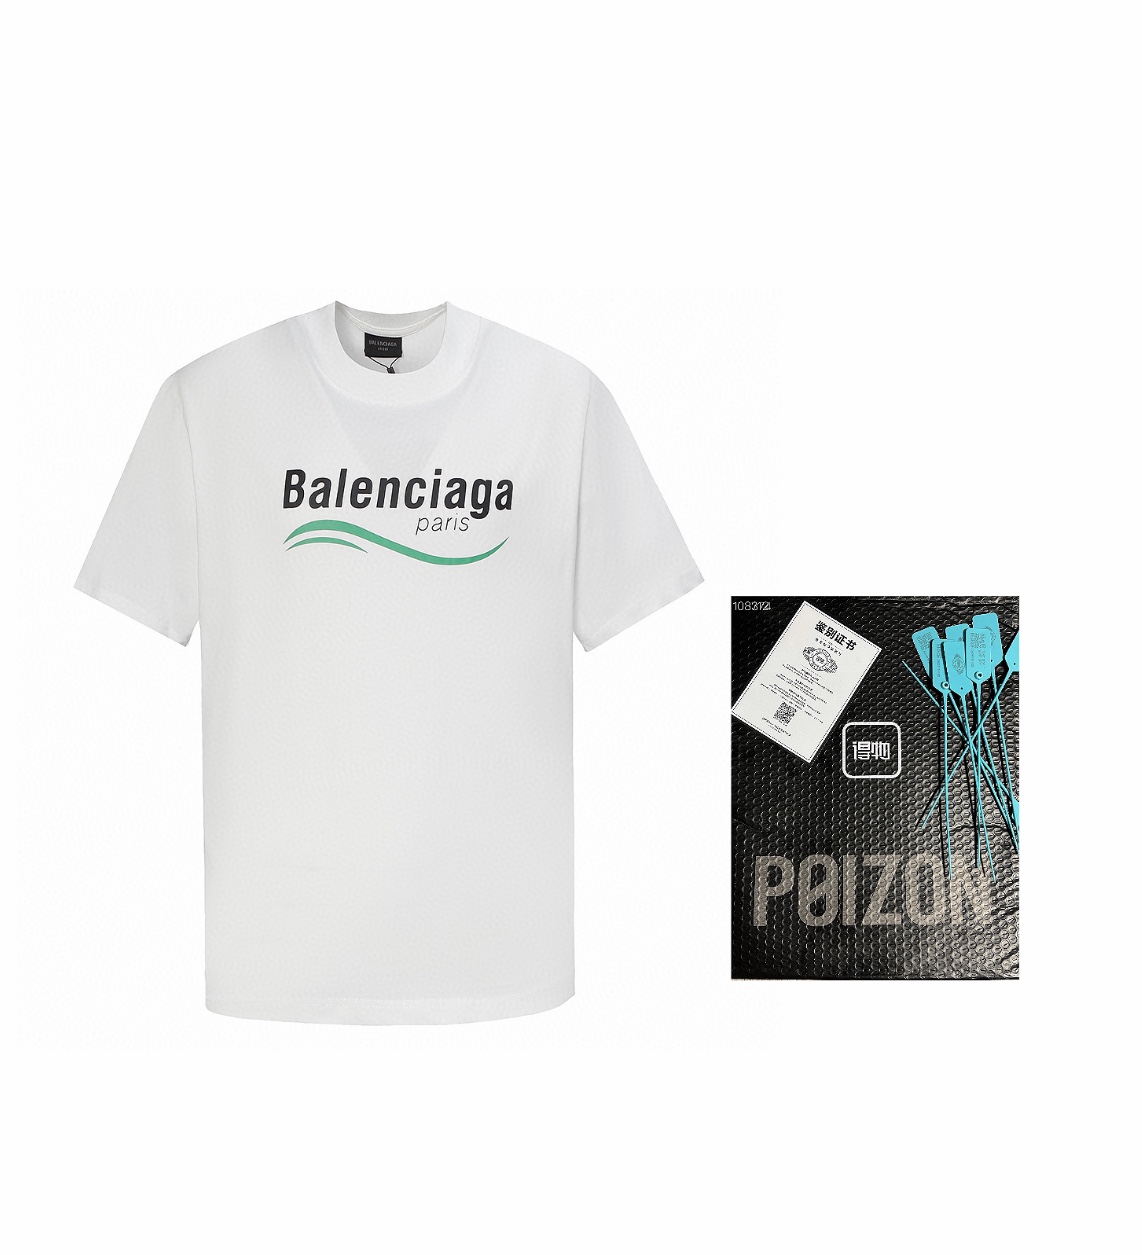 Balenciaga Clothing T-Shirt Black White Printing Unisex Short Sleeve